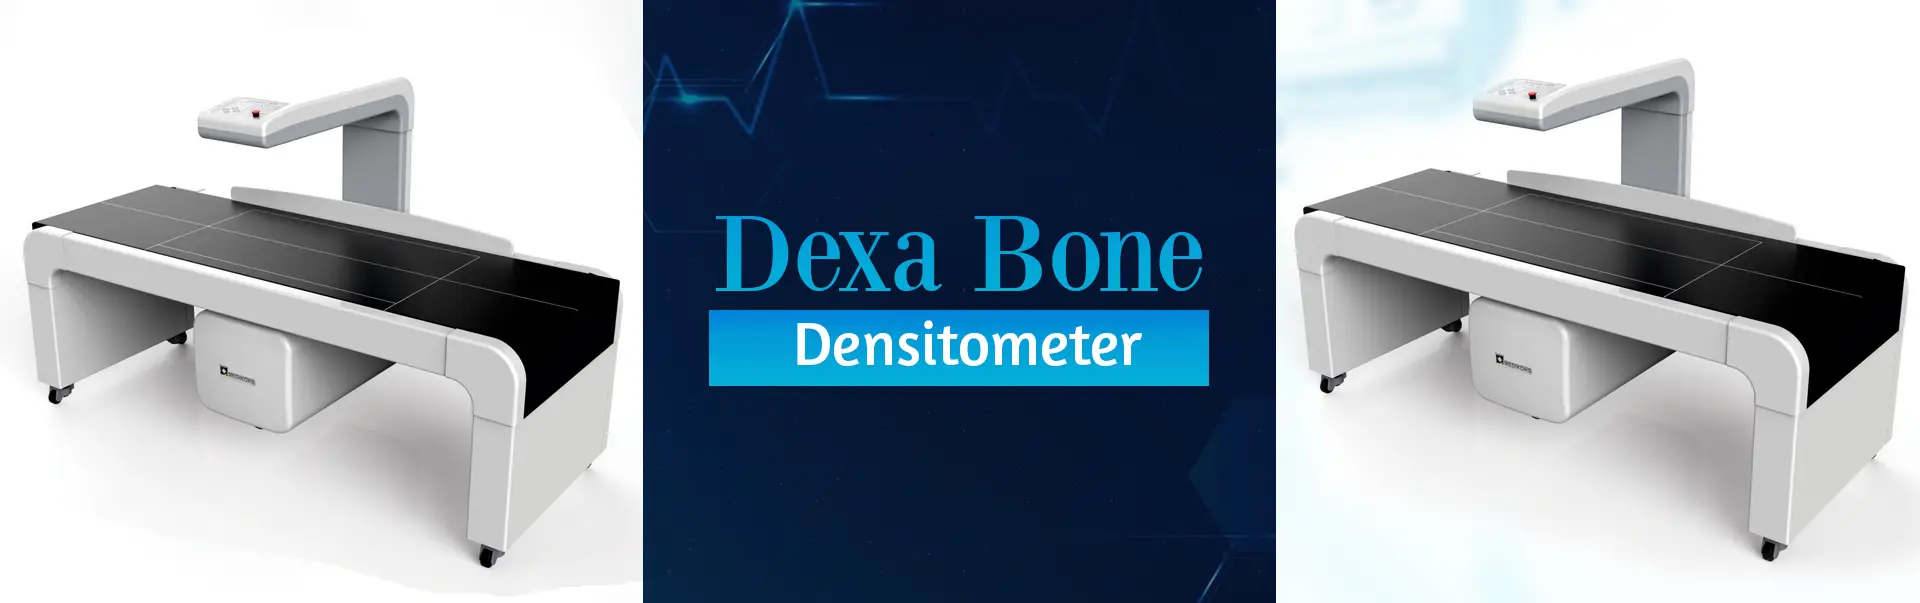 Dexa Bone Densitometer Manufacturers in Firozabad